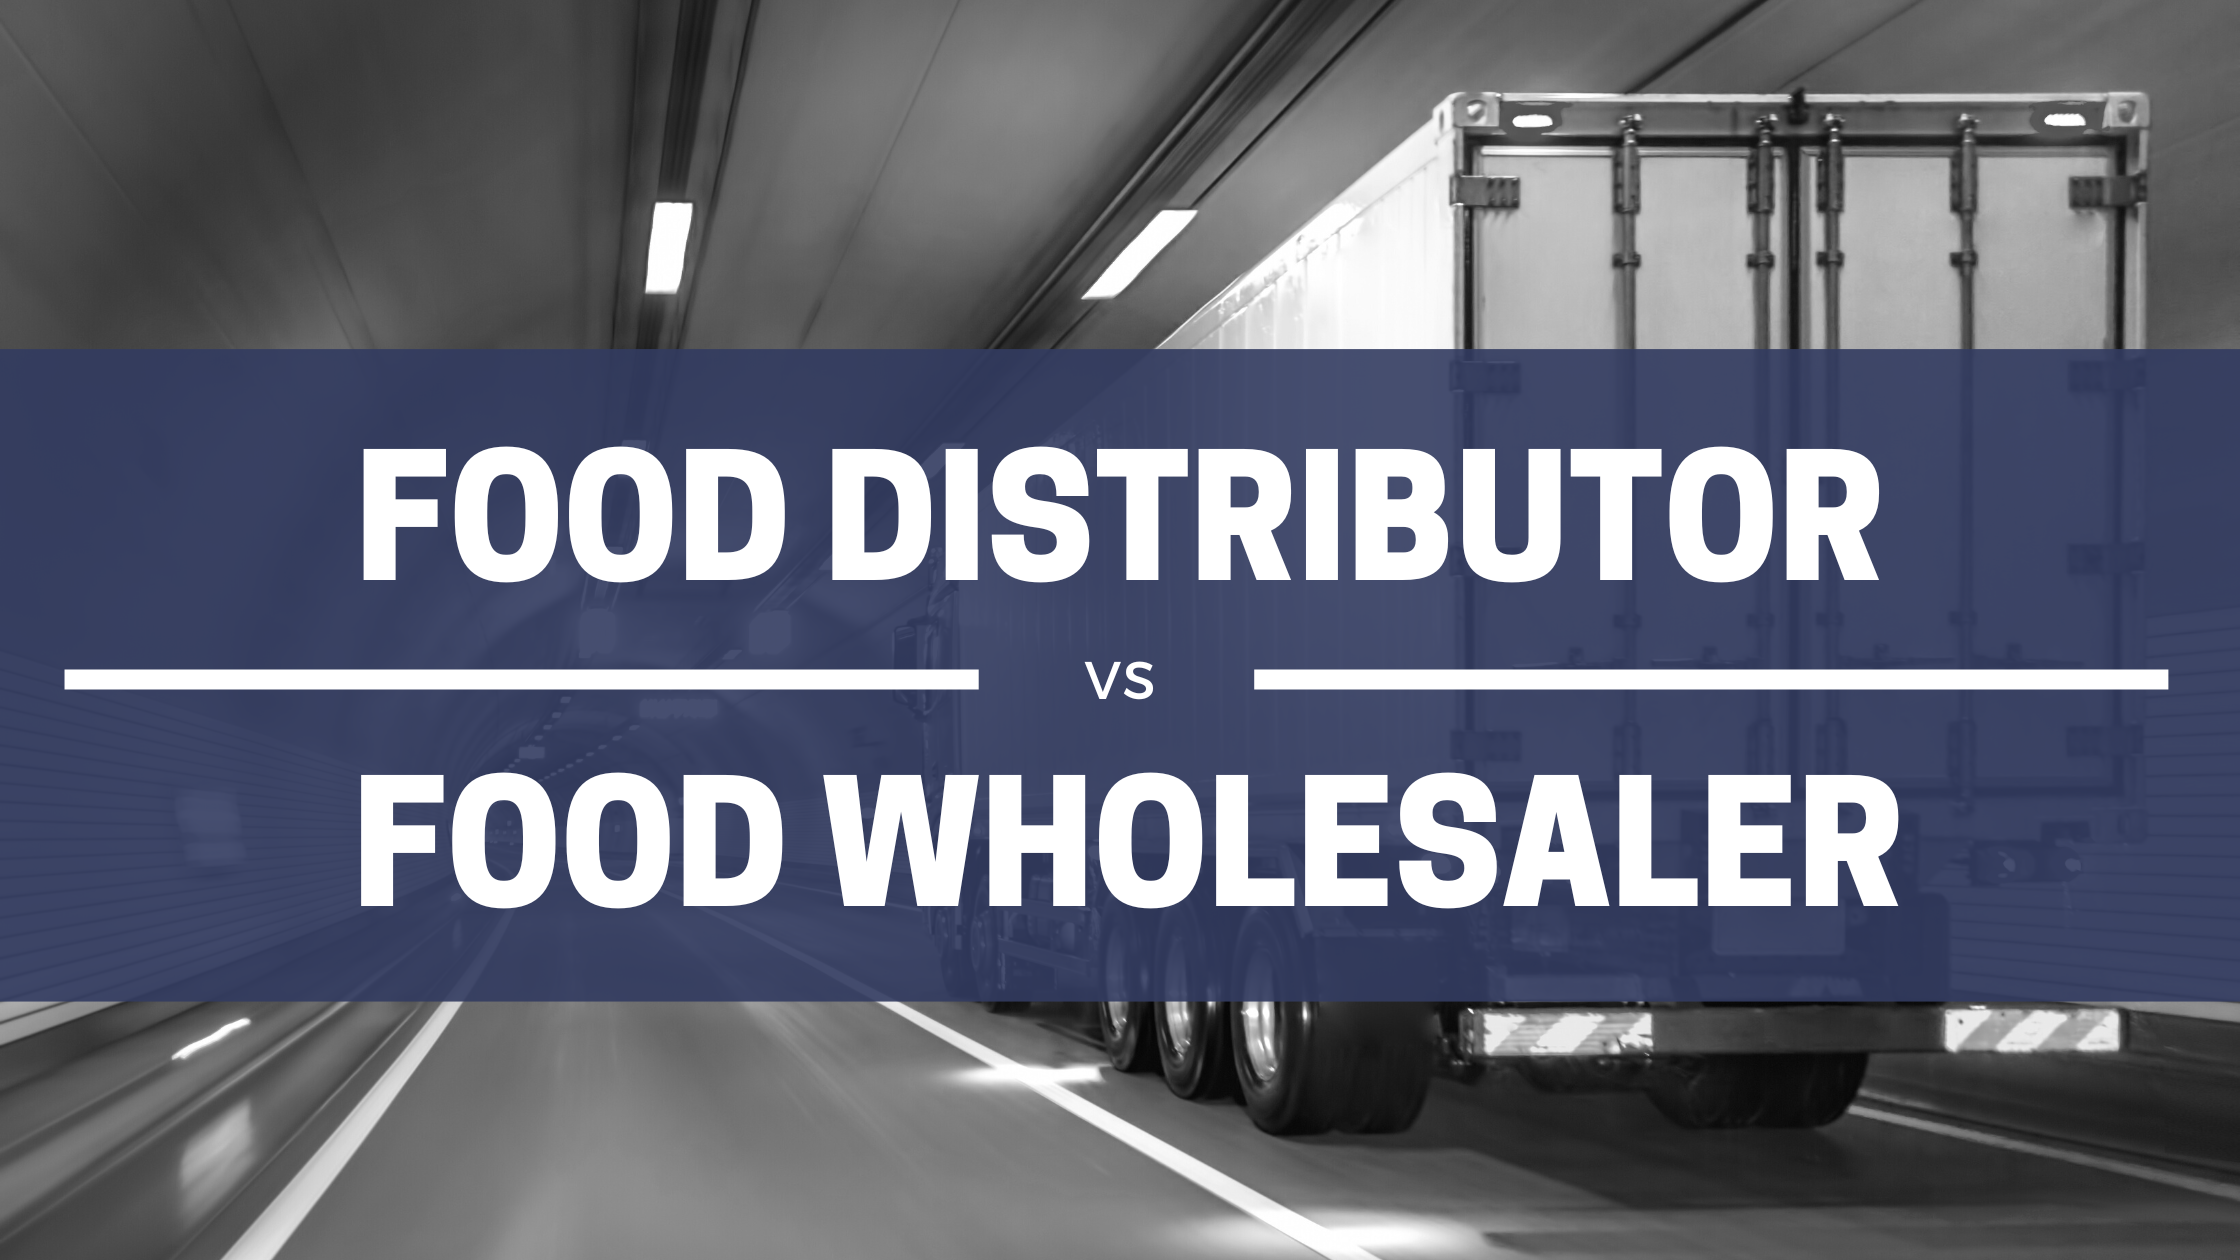 Food distributor vs food wholesaler